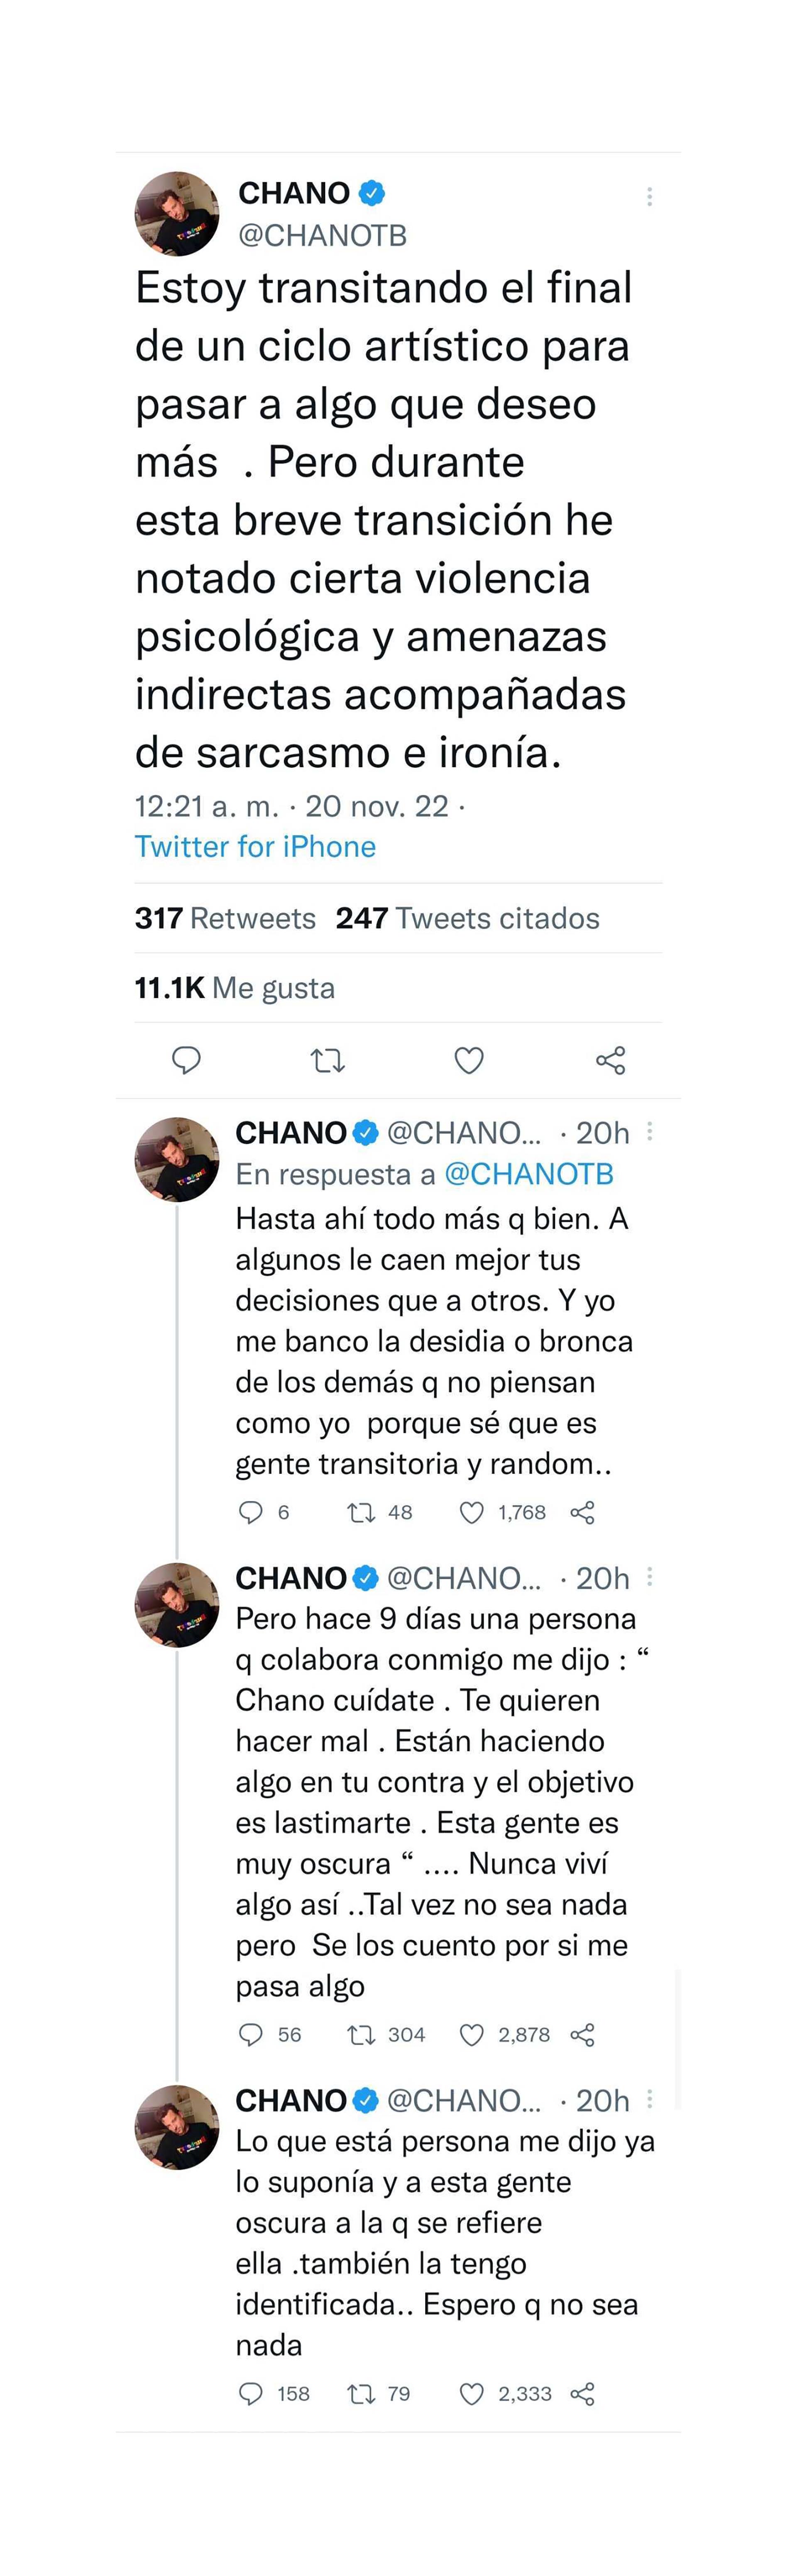 El hilo de Twitter de Chano